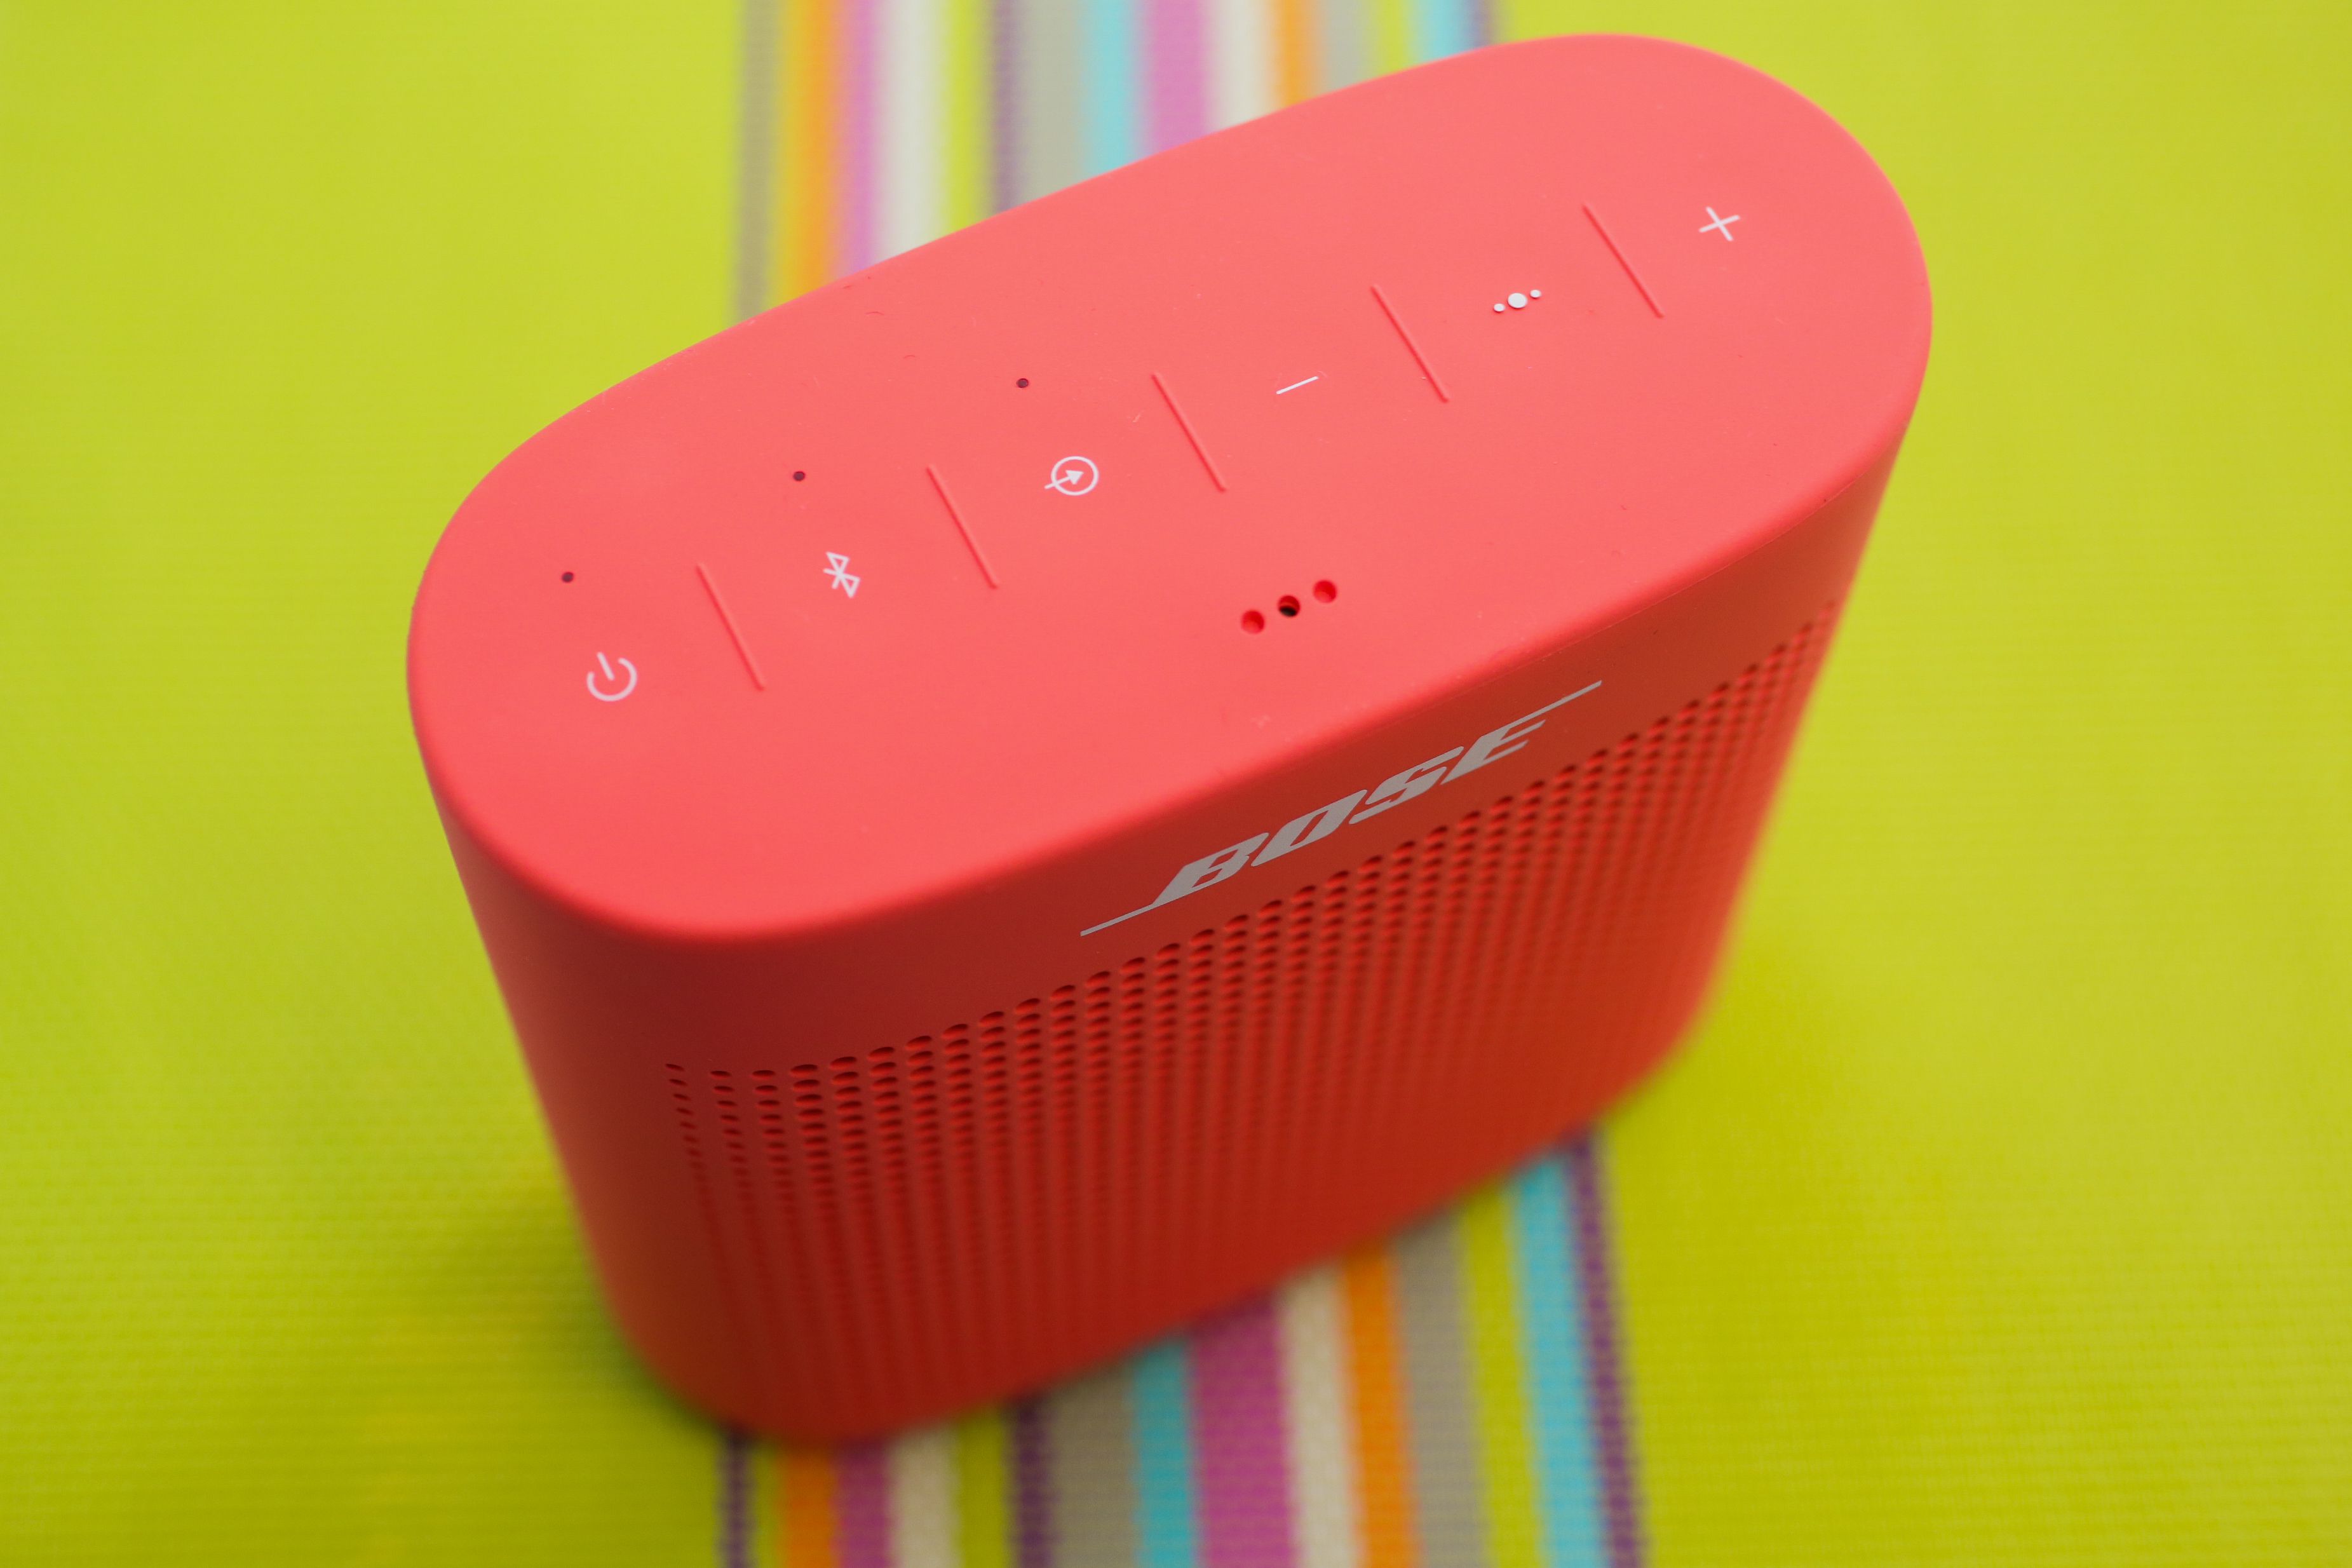 SoundLink Color II – Water-resistant Bluetooth Speaker